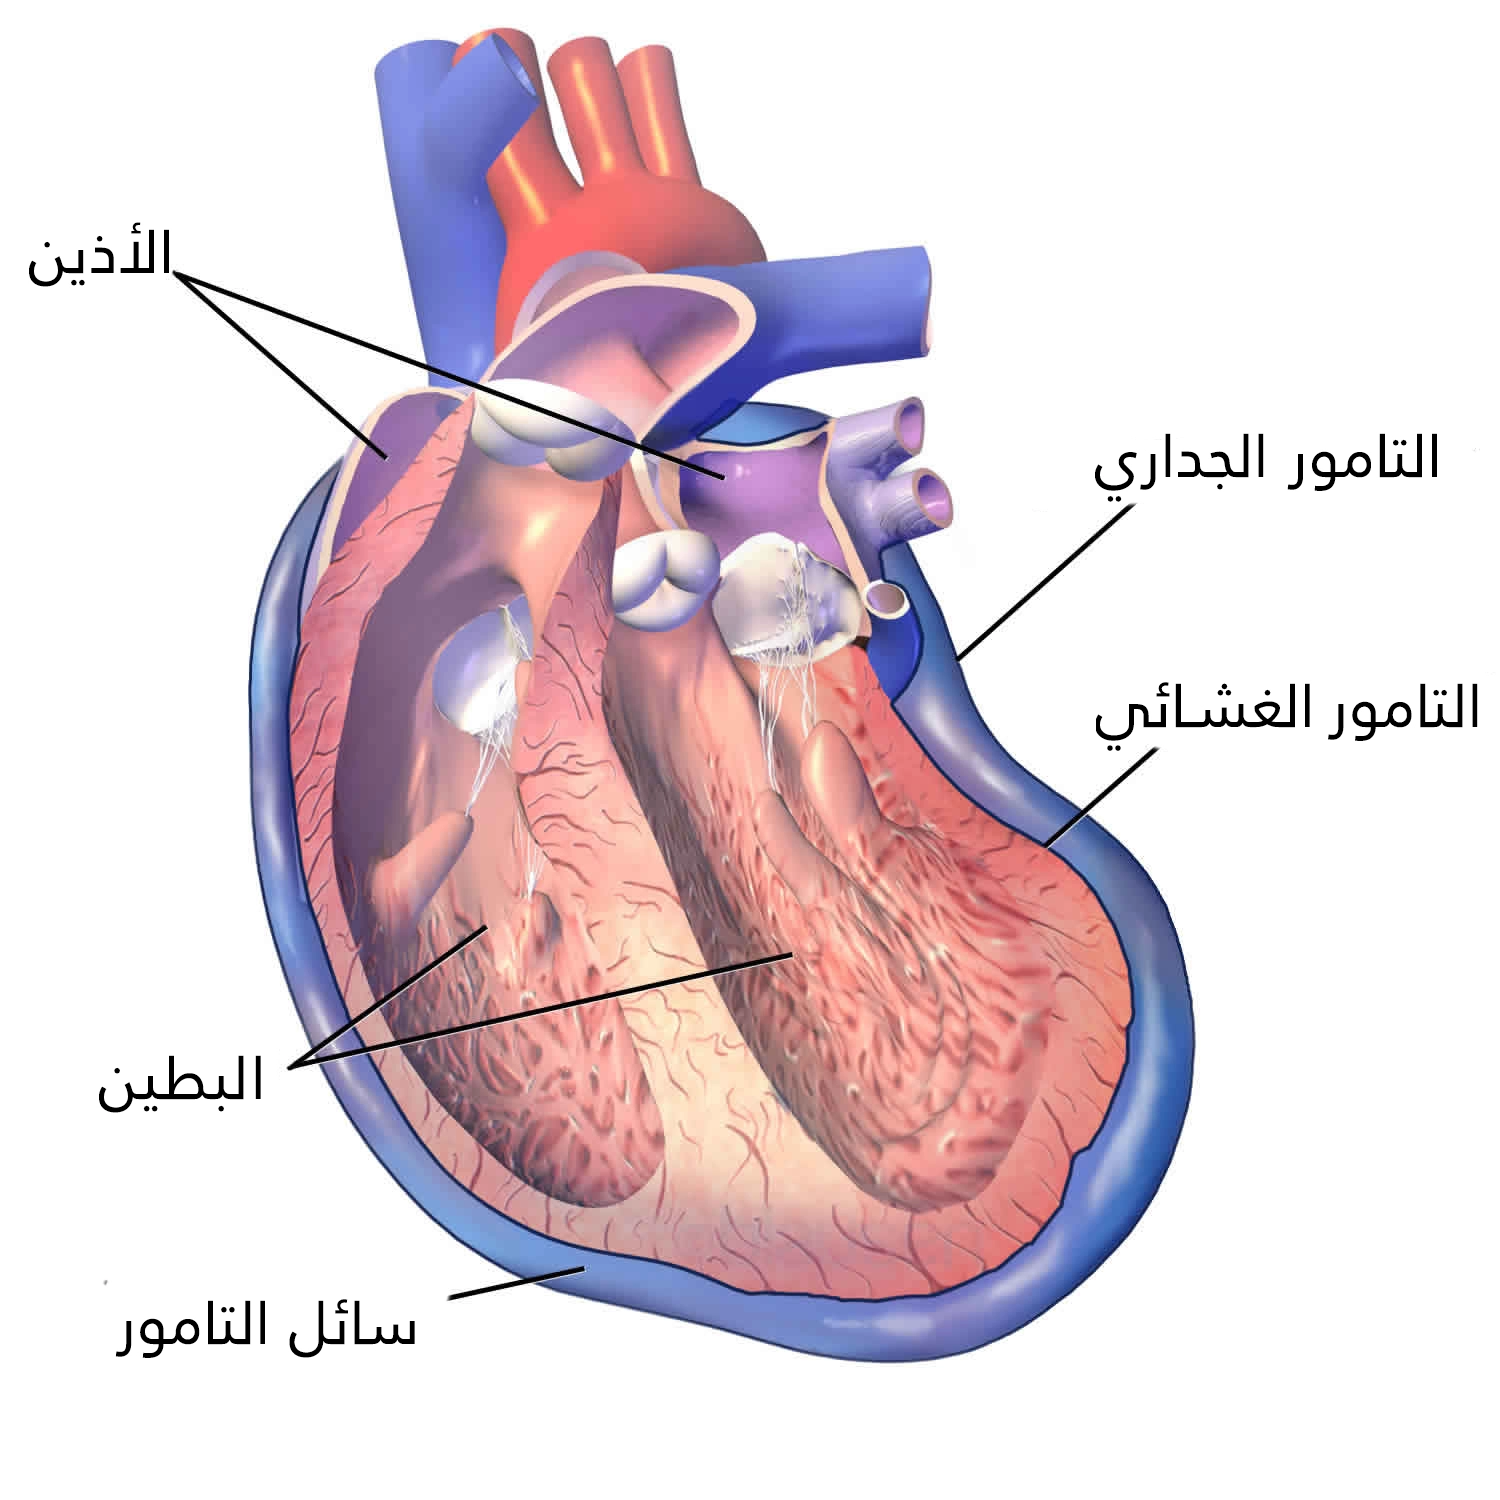 Pericardial membrane surrounding the heart